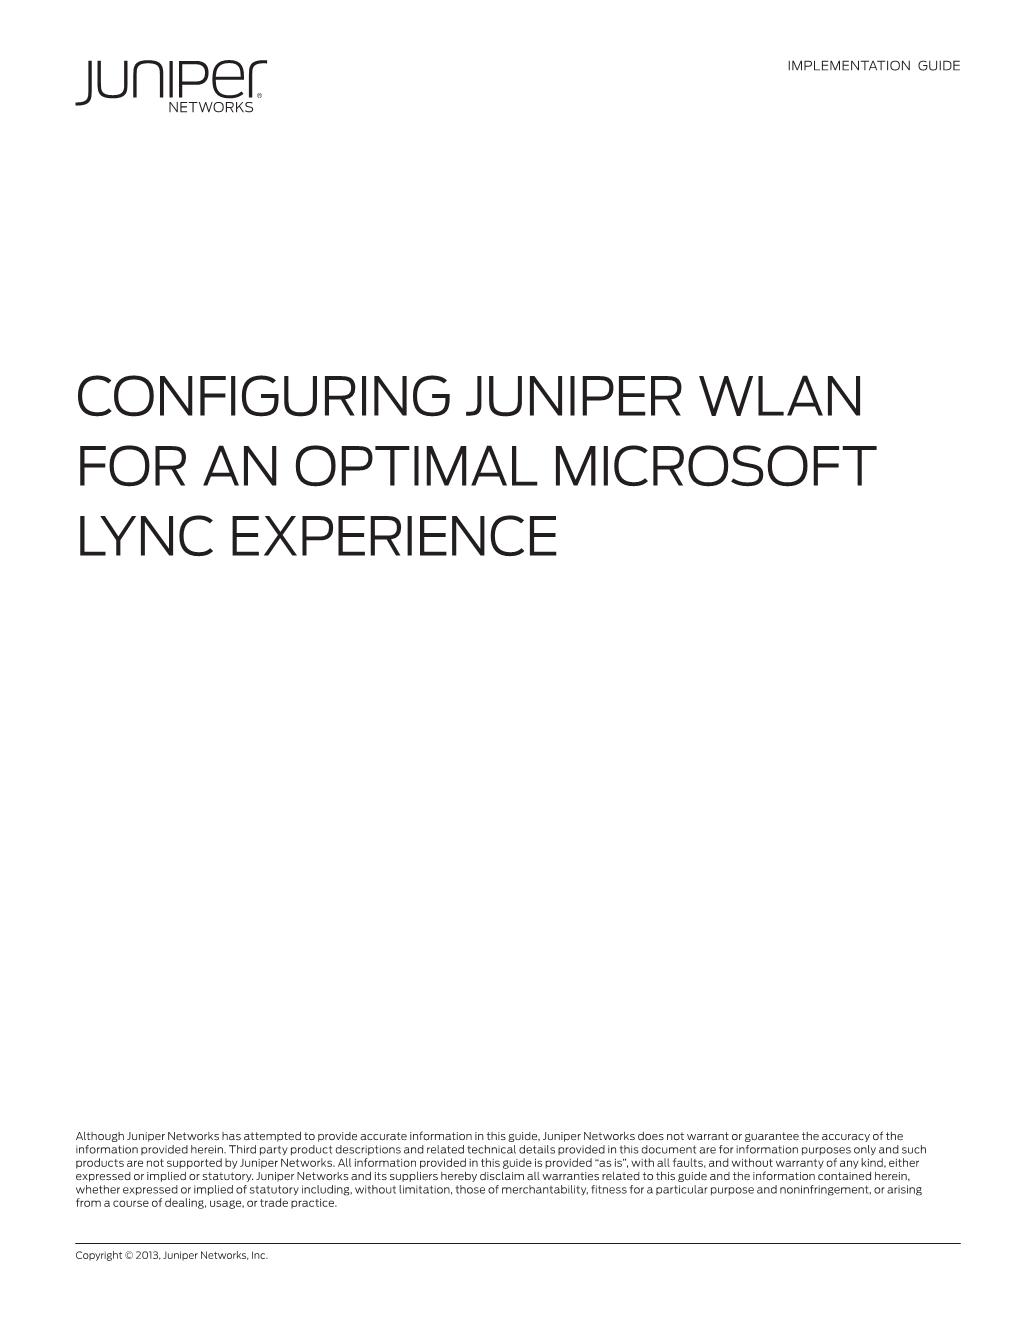 Configuring Juniper WLAN for an Optimal Microsoft Lync Experience